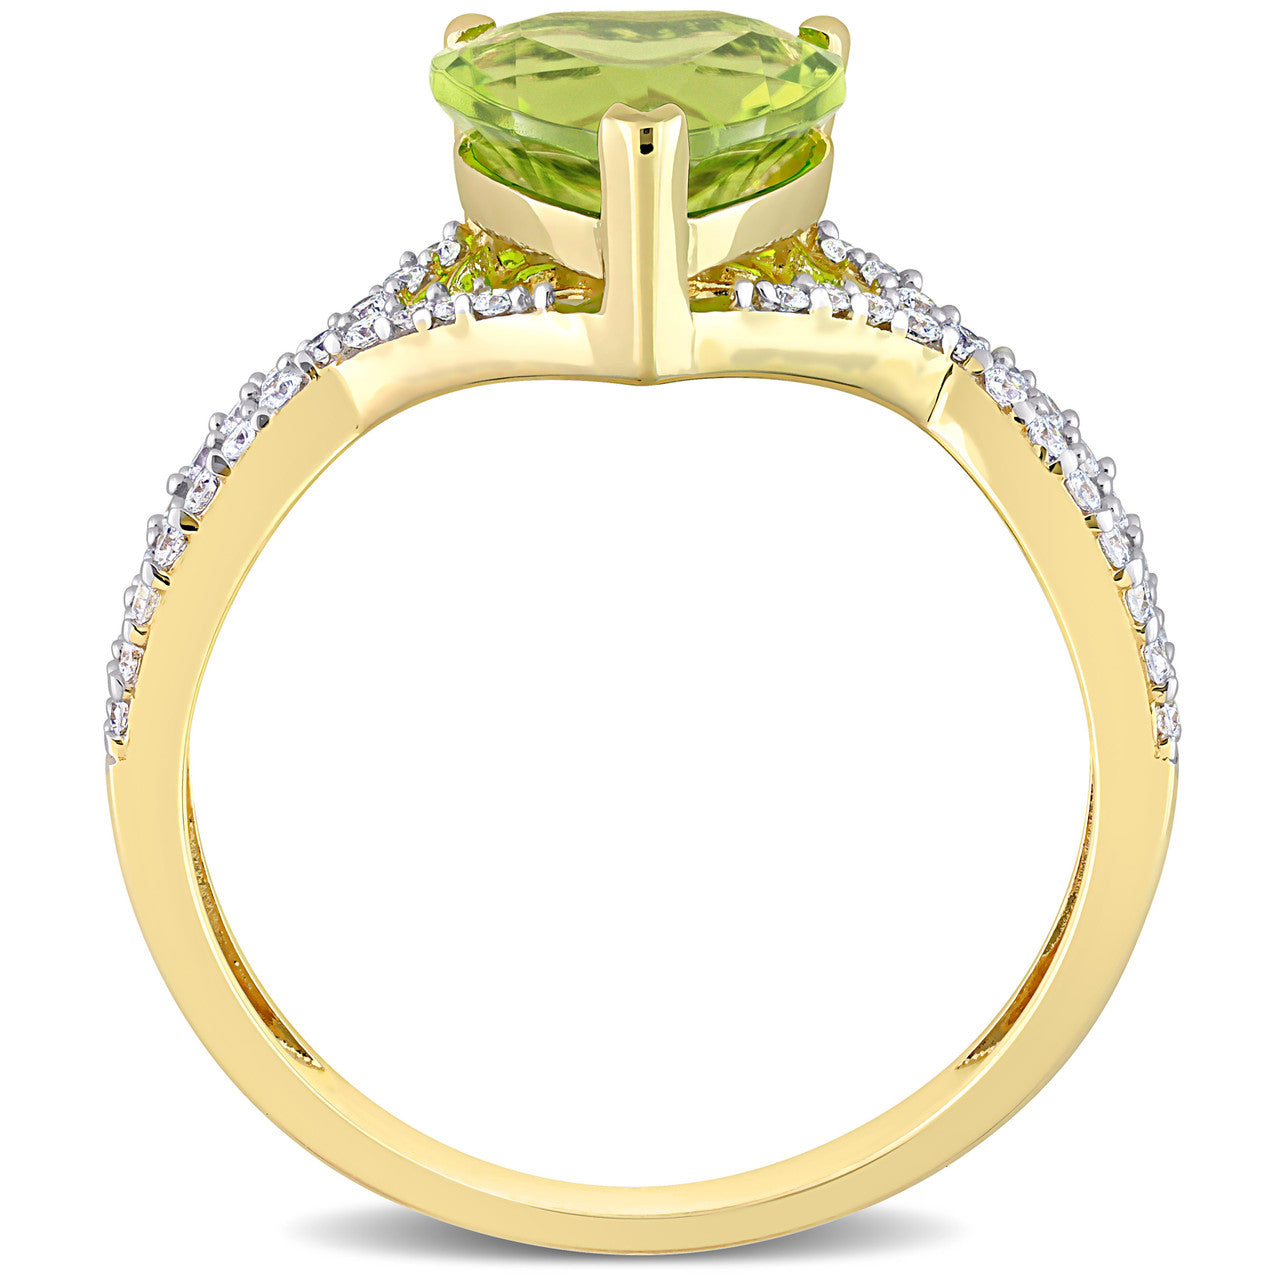 Ice Jewellery 1/5 CT Diamond And 1.67 CT Peridot Crossover Engagement Ring in 14k Yellow Gold - 75000005669 | Ice Jewellery Australia